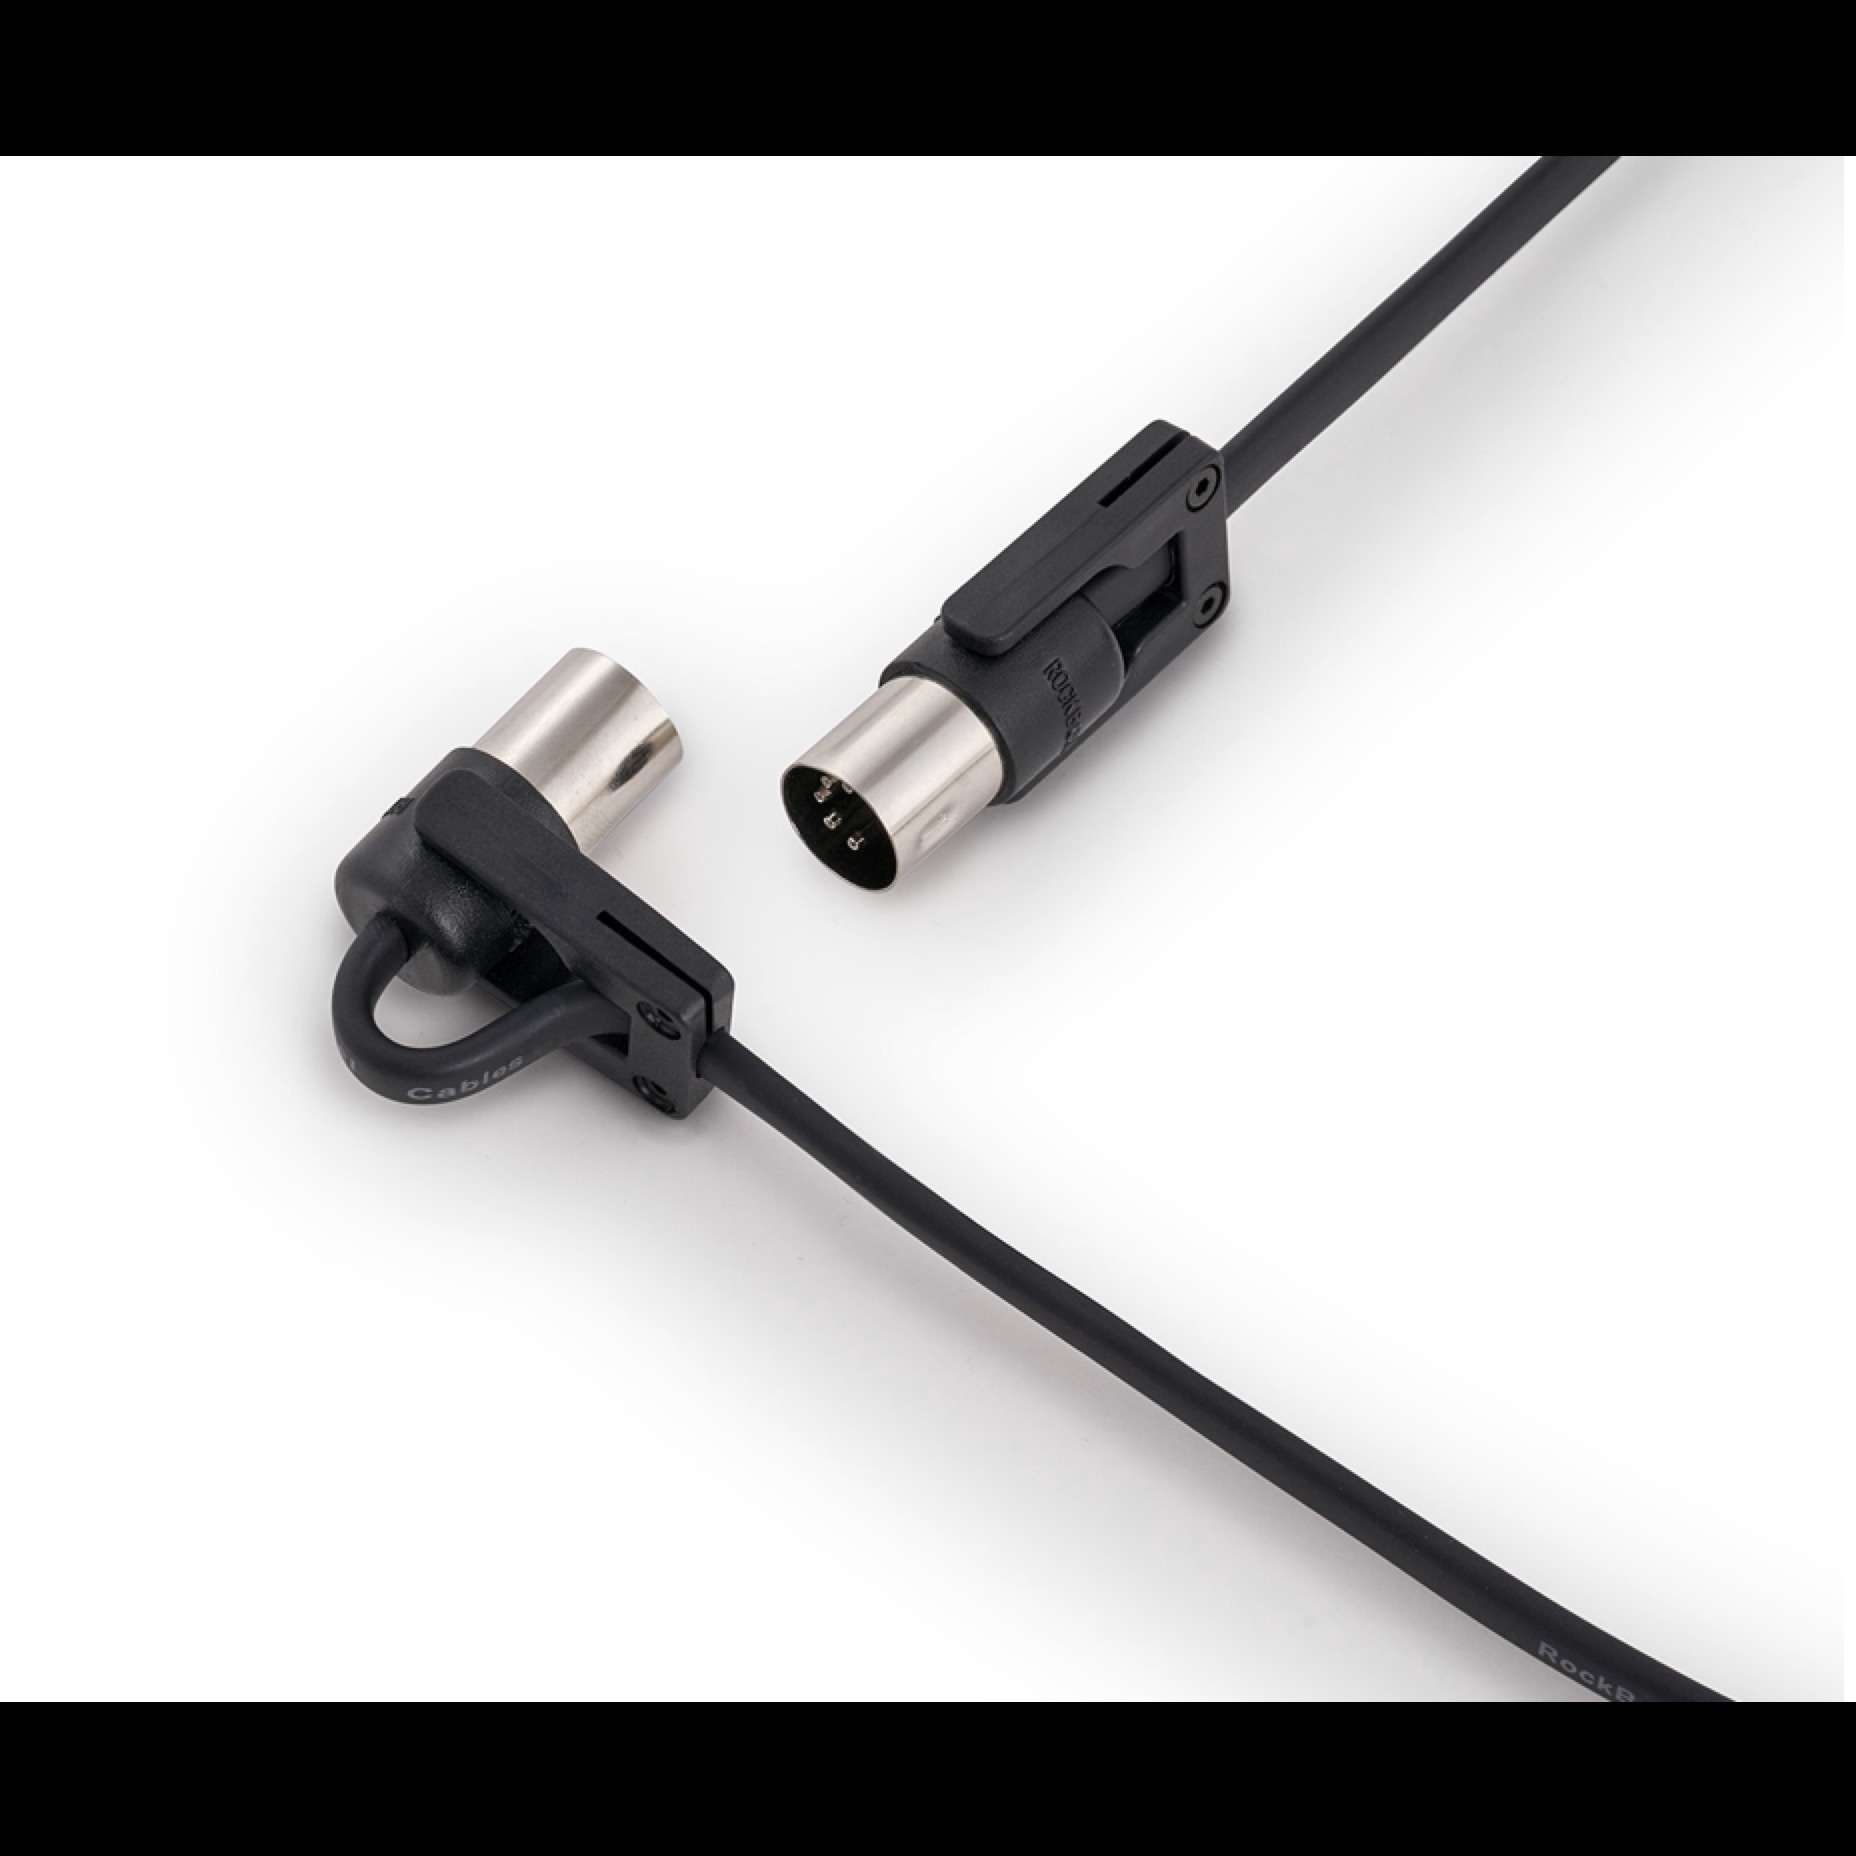 Rockboard FlaX Plug 30cm (11 13/16") flat MIDI Cable - angle or straight (RBO CAB MD FX 30 BK)